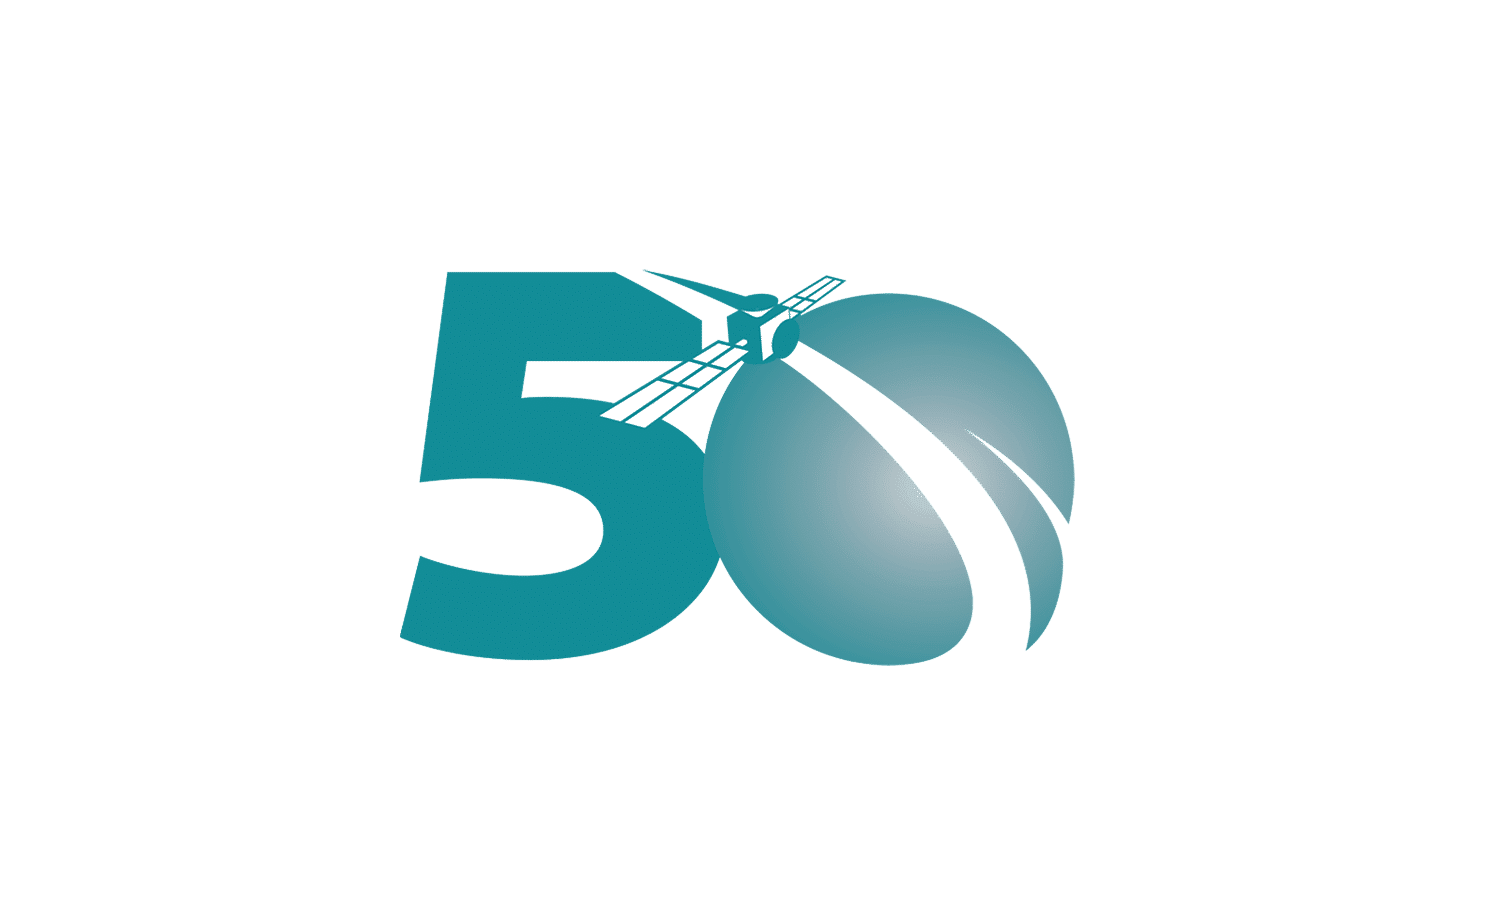 Intelsat 50 Year Anniversary logo